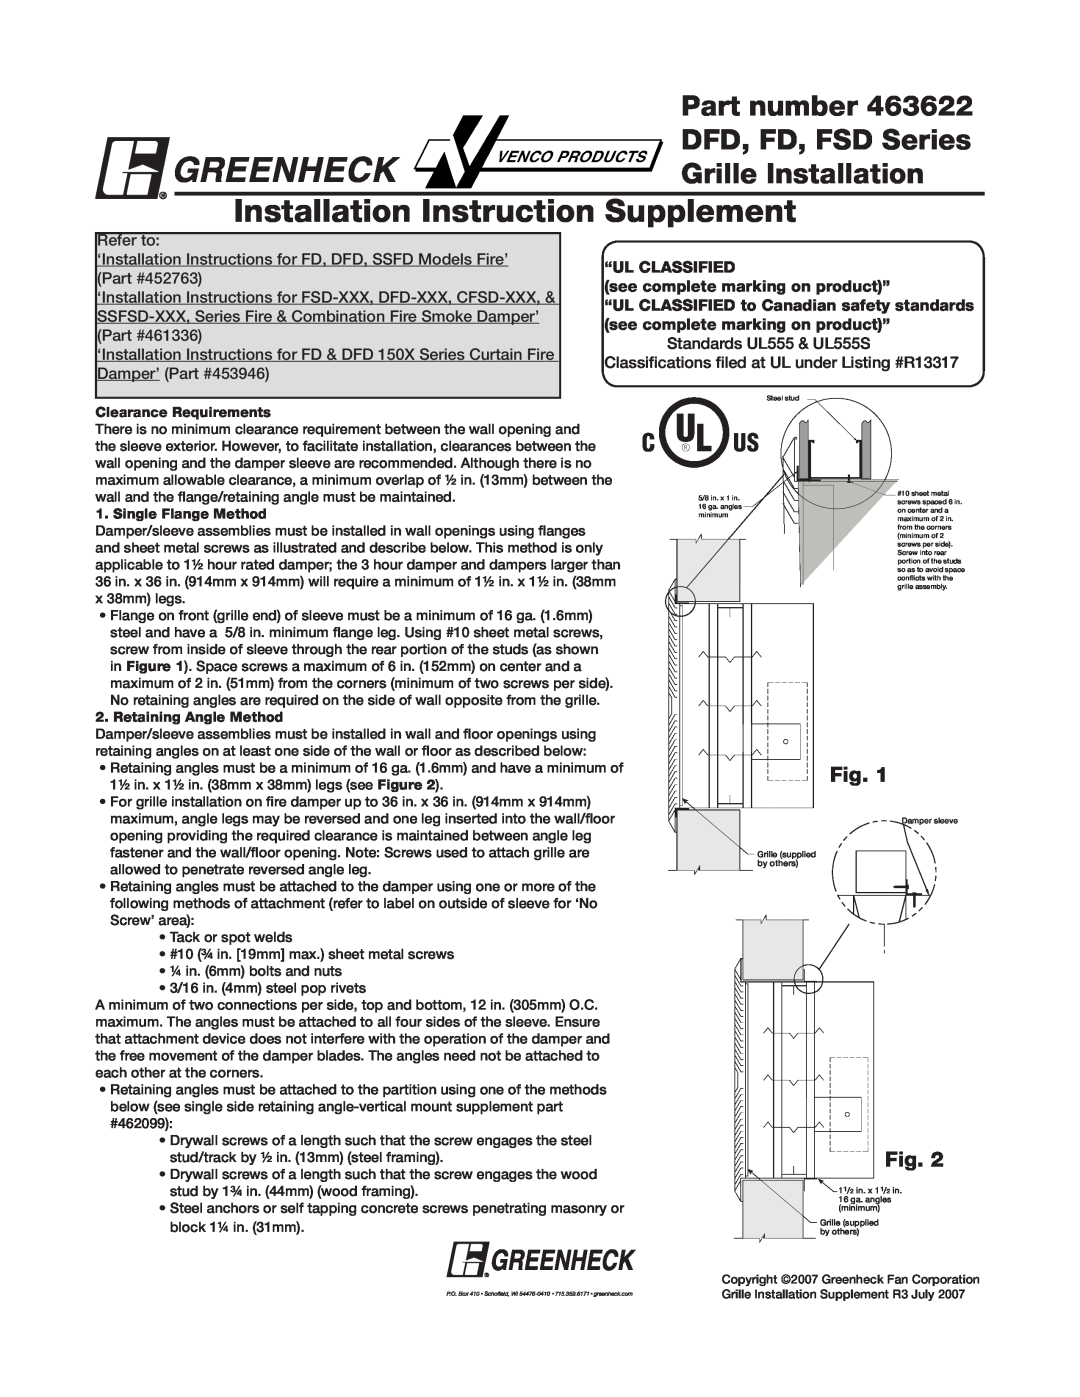 Greenheck Fan 463622 installation instructions Installation Instruction Supplement, Part number DFD, FD, FSD Series 